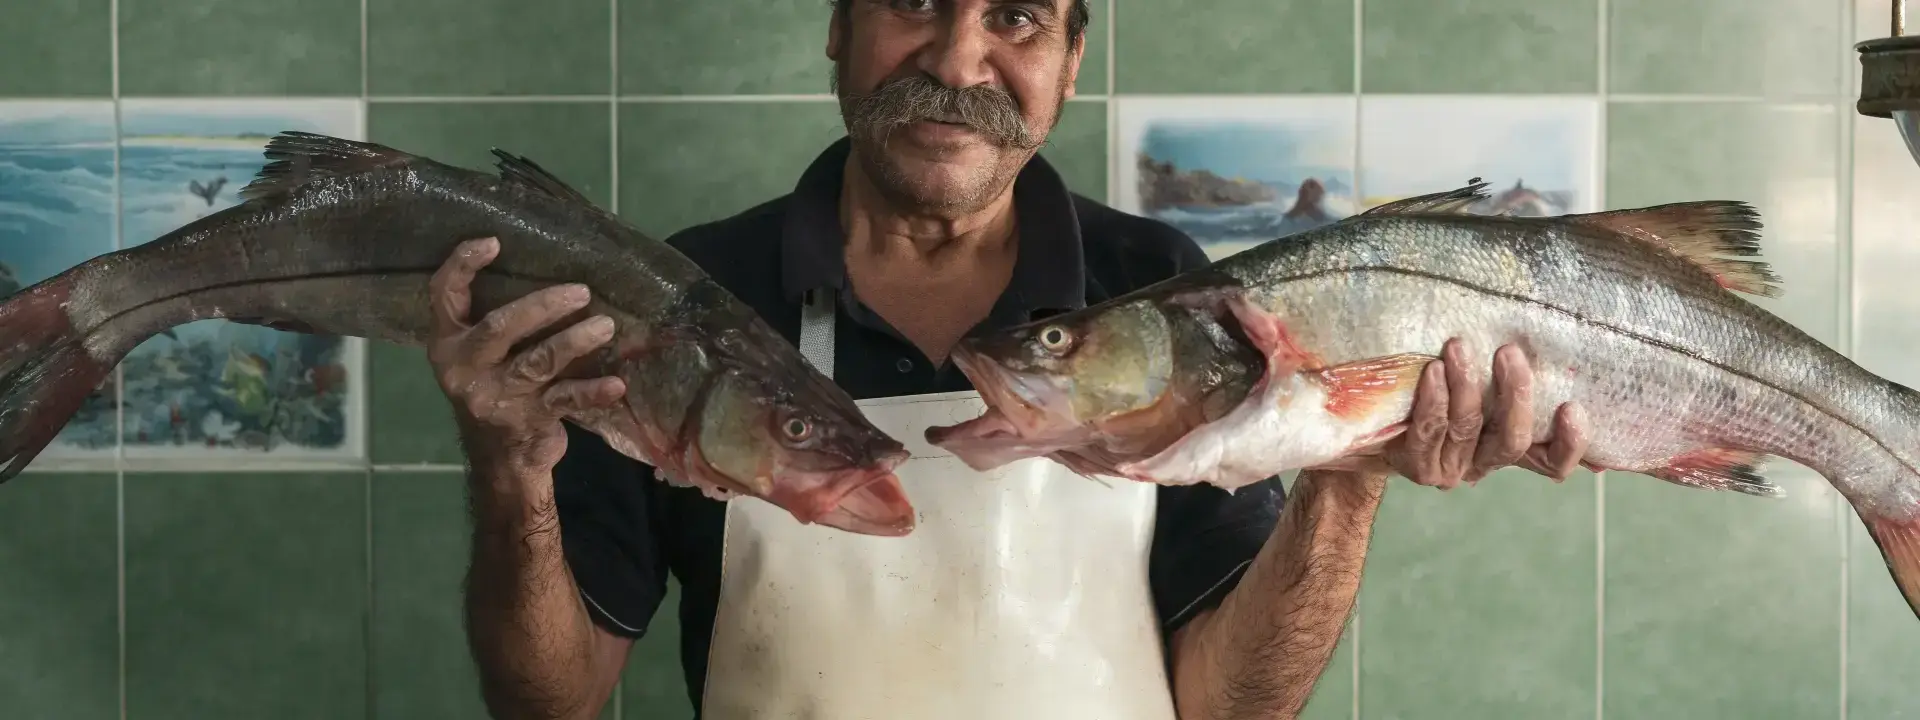 Fishmonger Staff in Czech Republic